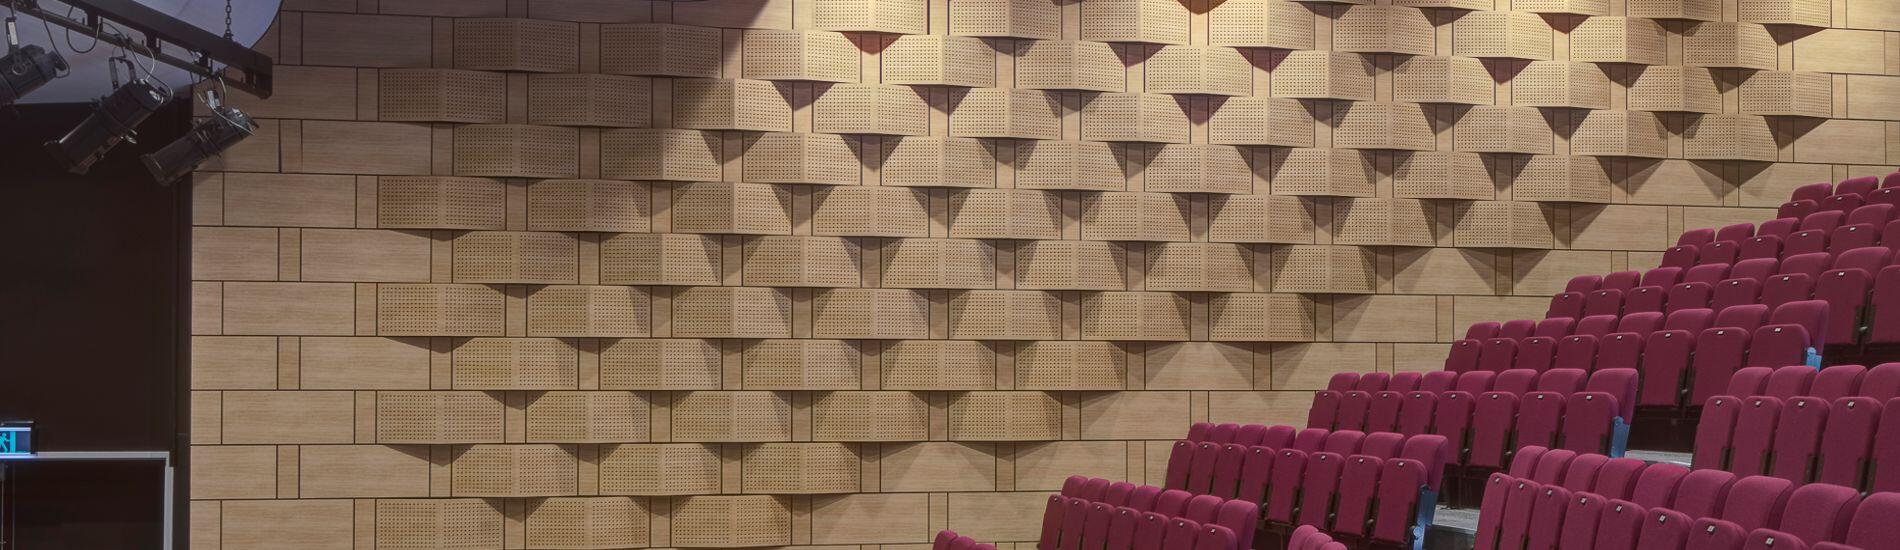 SUPACOUSTIC Acoustic Panels Improve Acoustics in Refurbishment of School Theatre